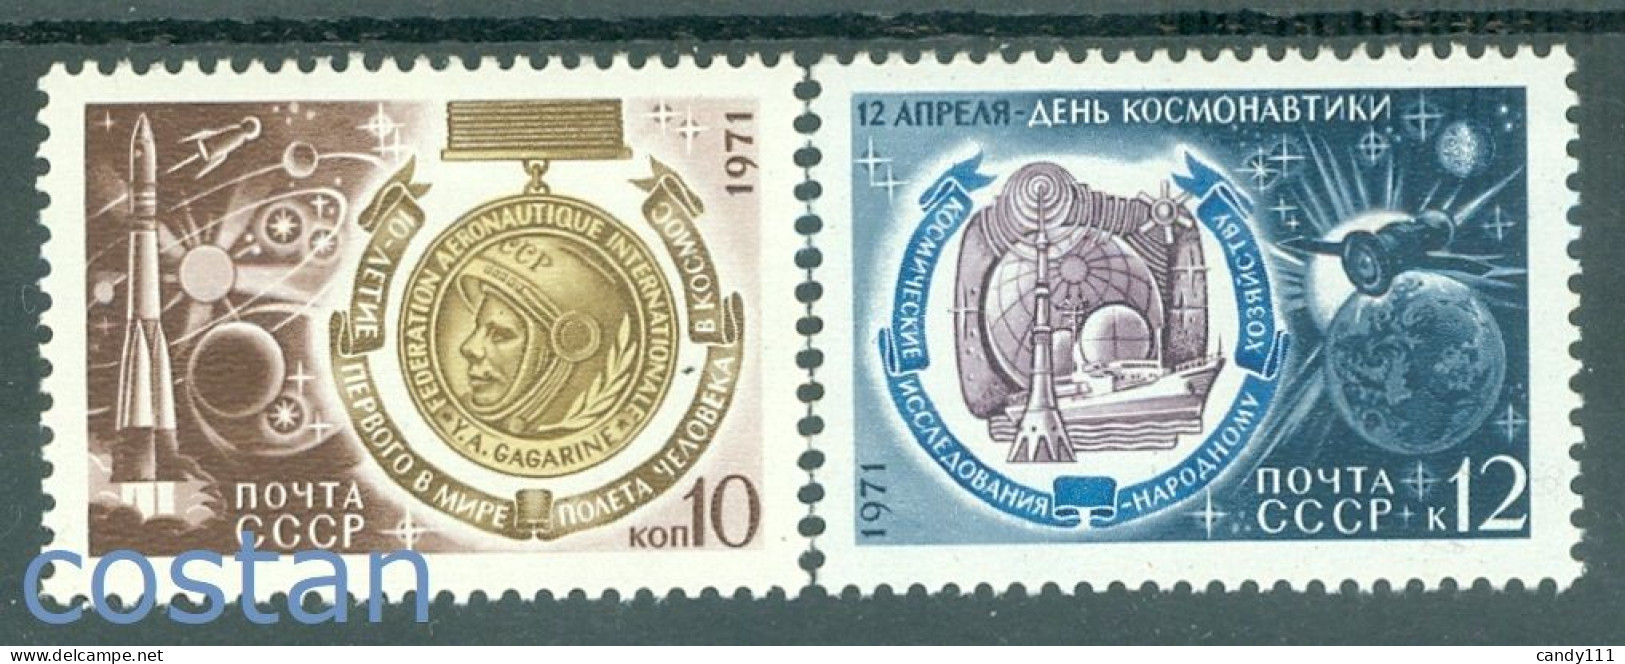 1971 Cosmonautics Day,Space,Gagarin Medal,Satellite,ship,rocket,Russia,3867,MNH - Ungebraucht